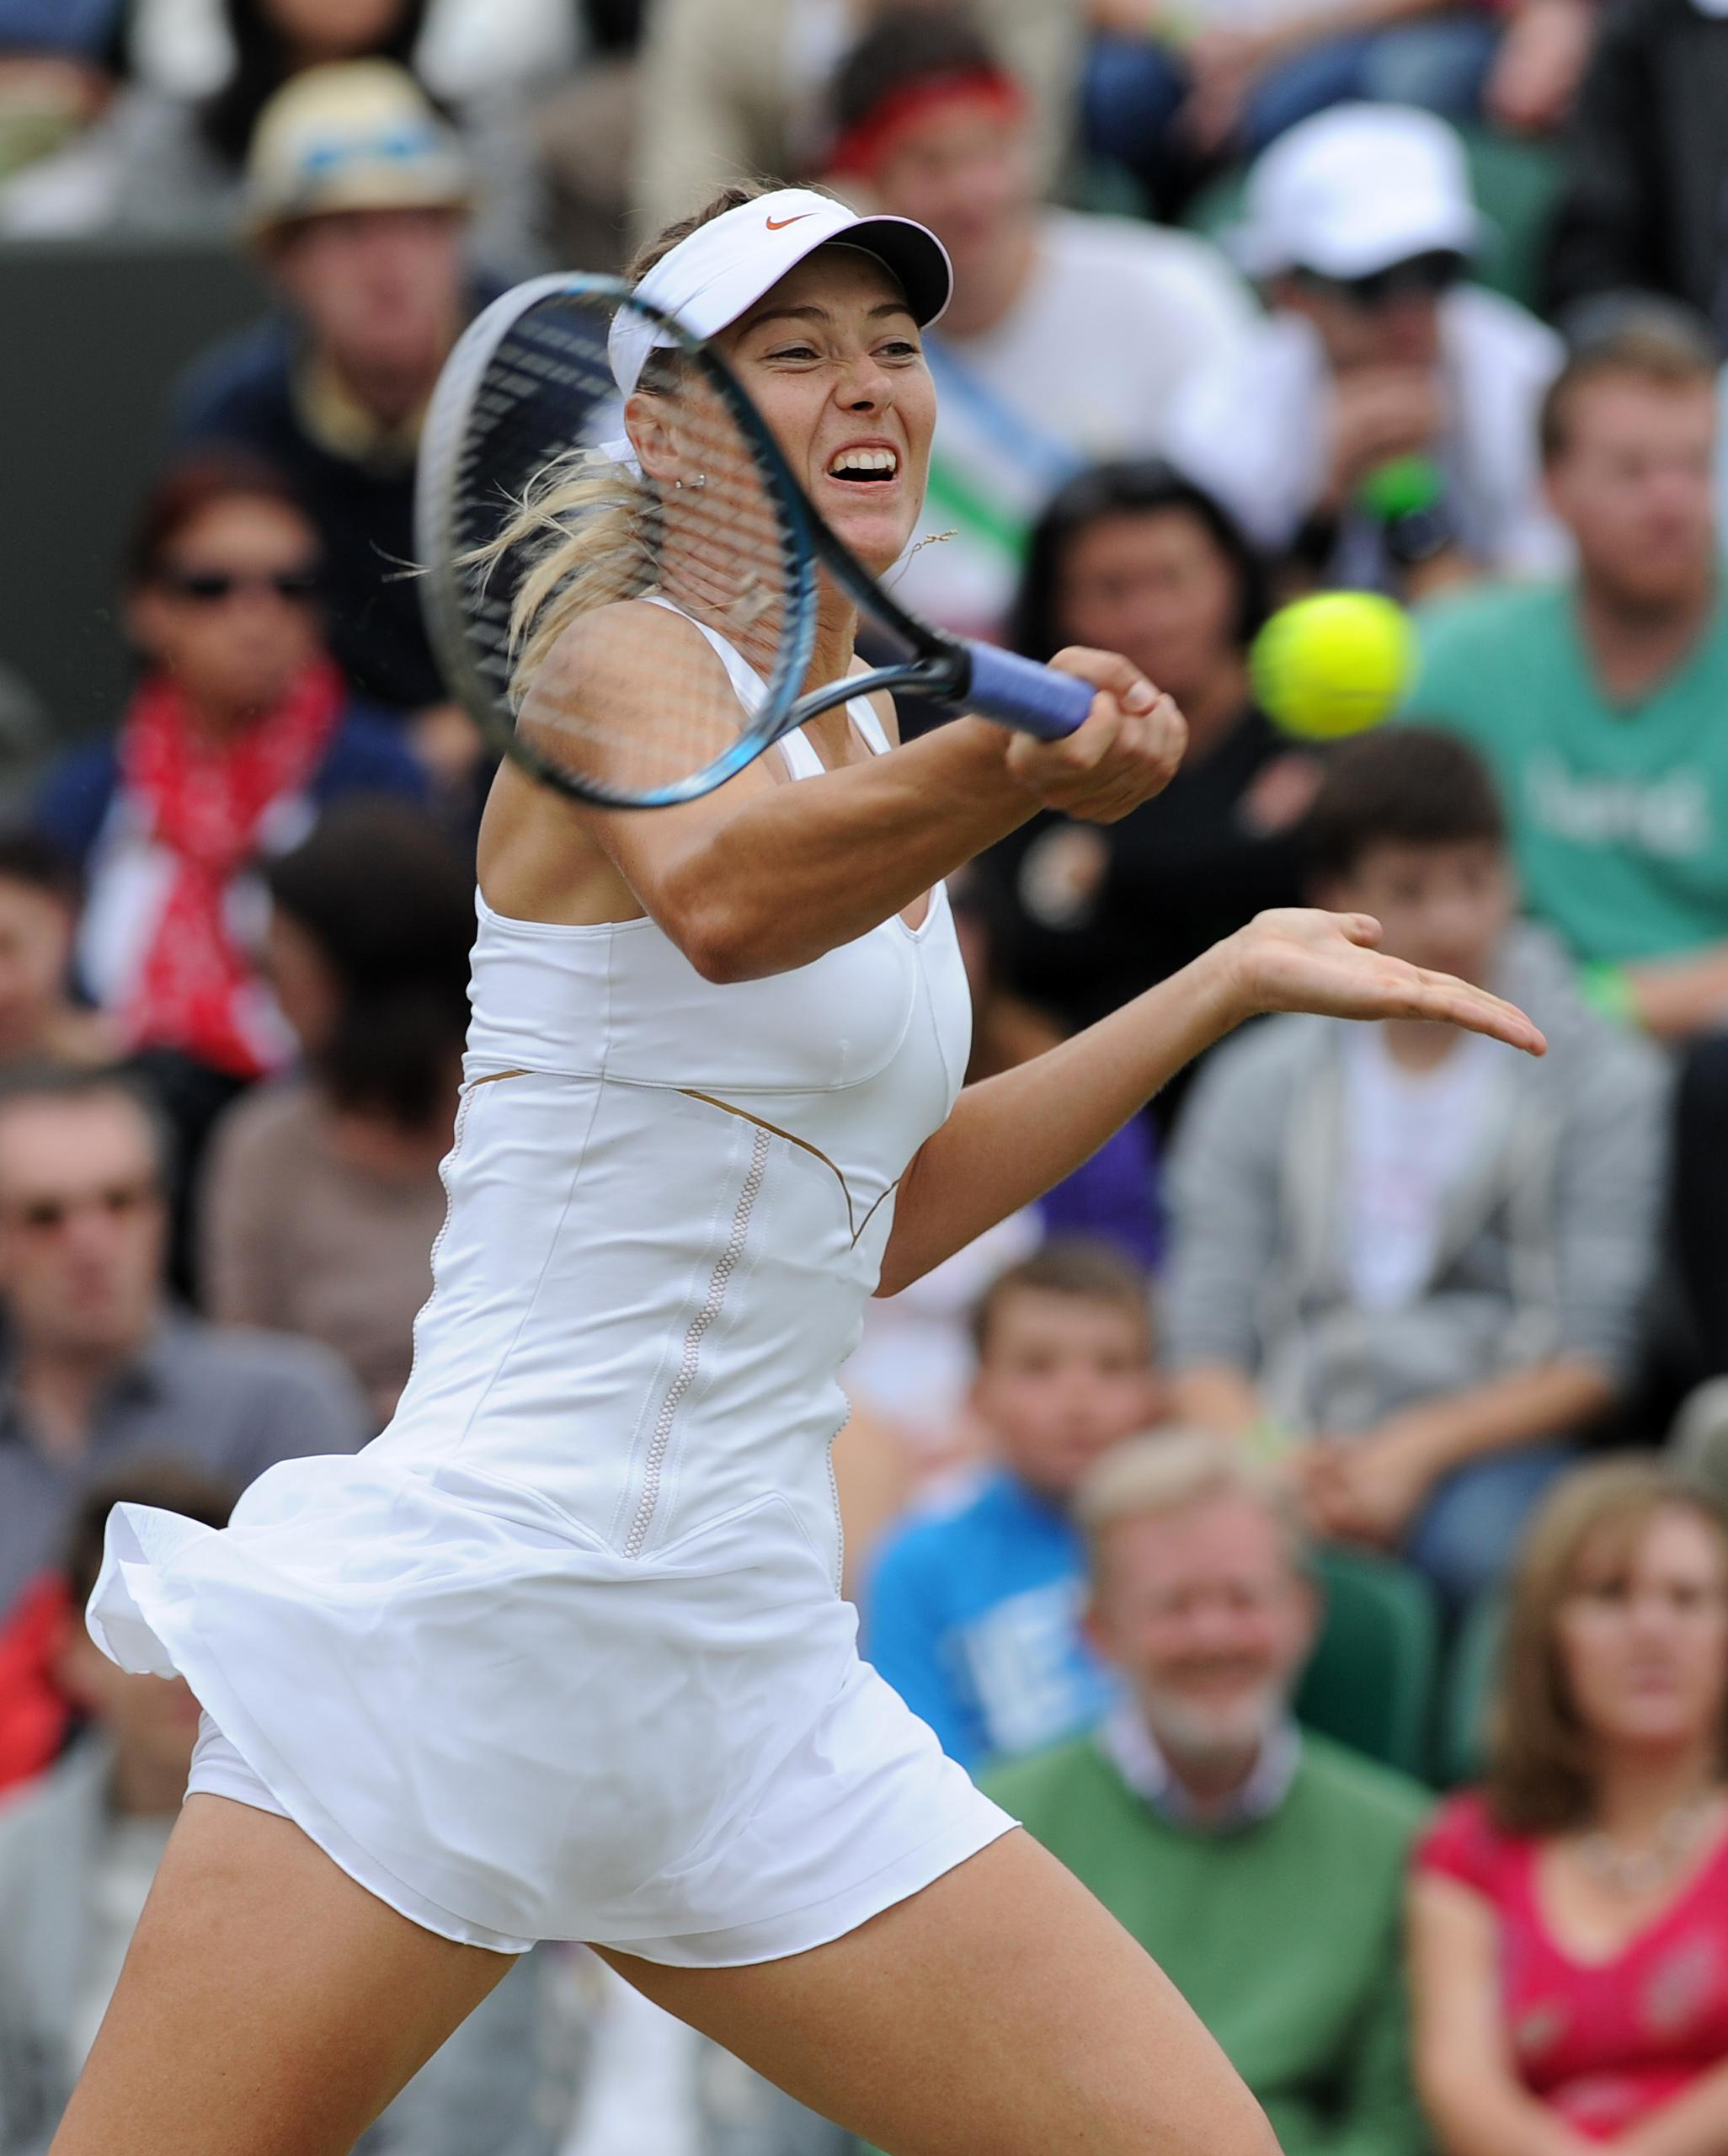 kaneda Maria Sharapova Wimbledon 2011 R 3 16